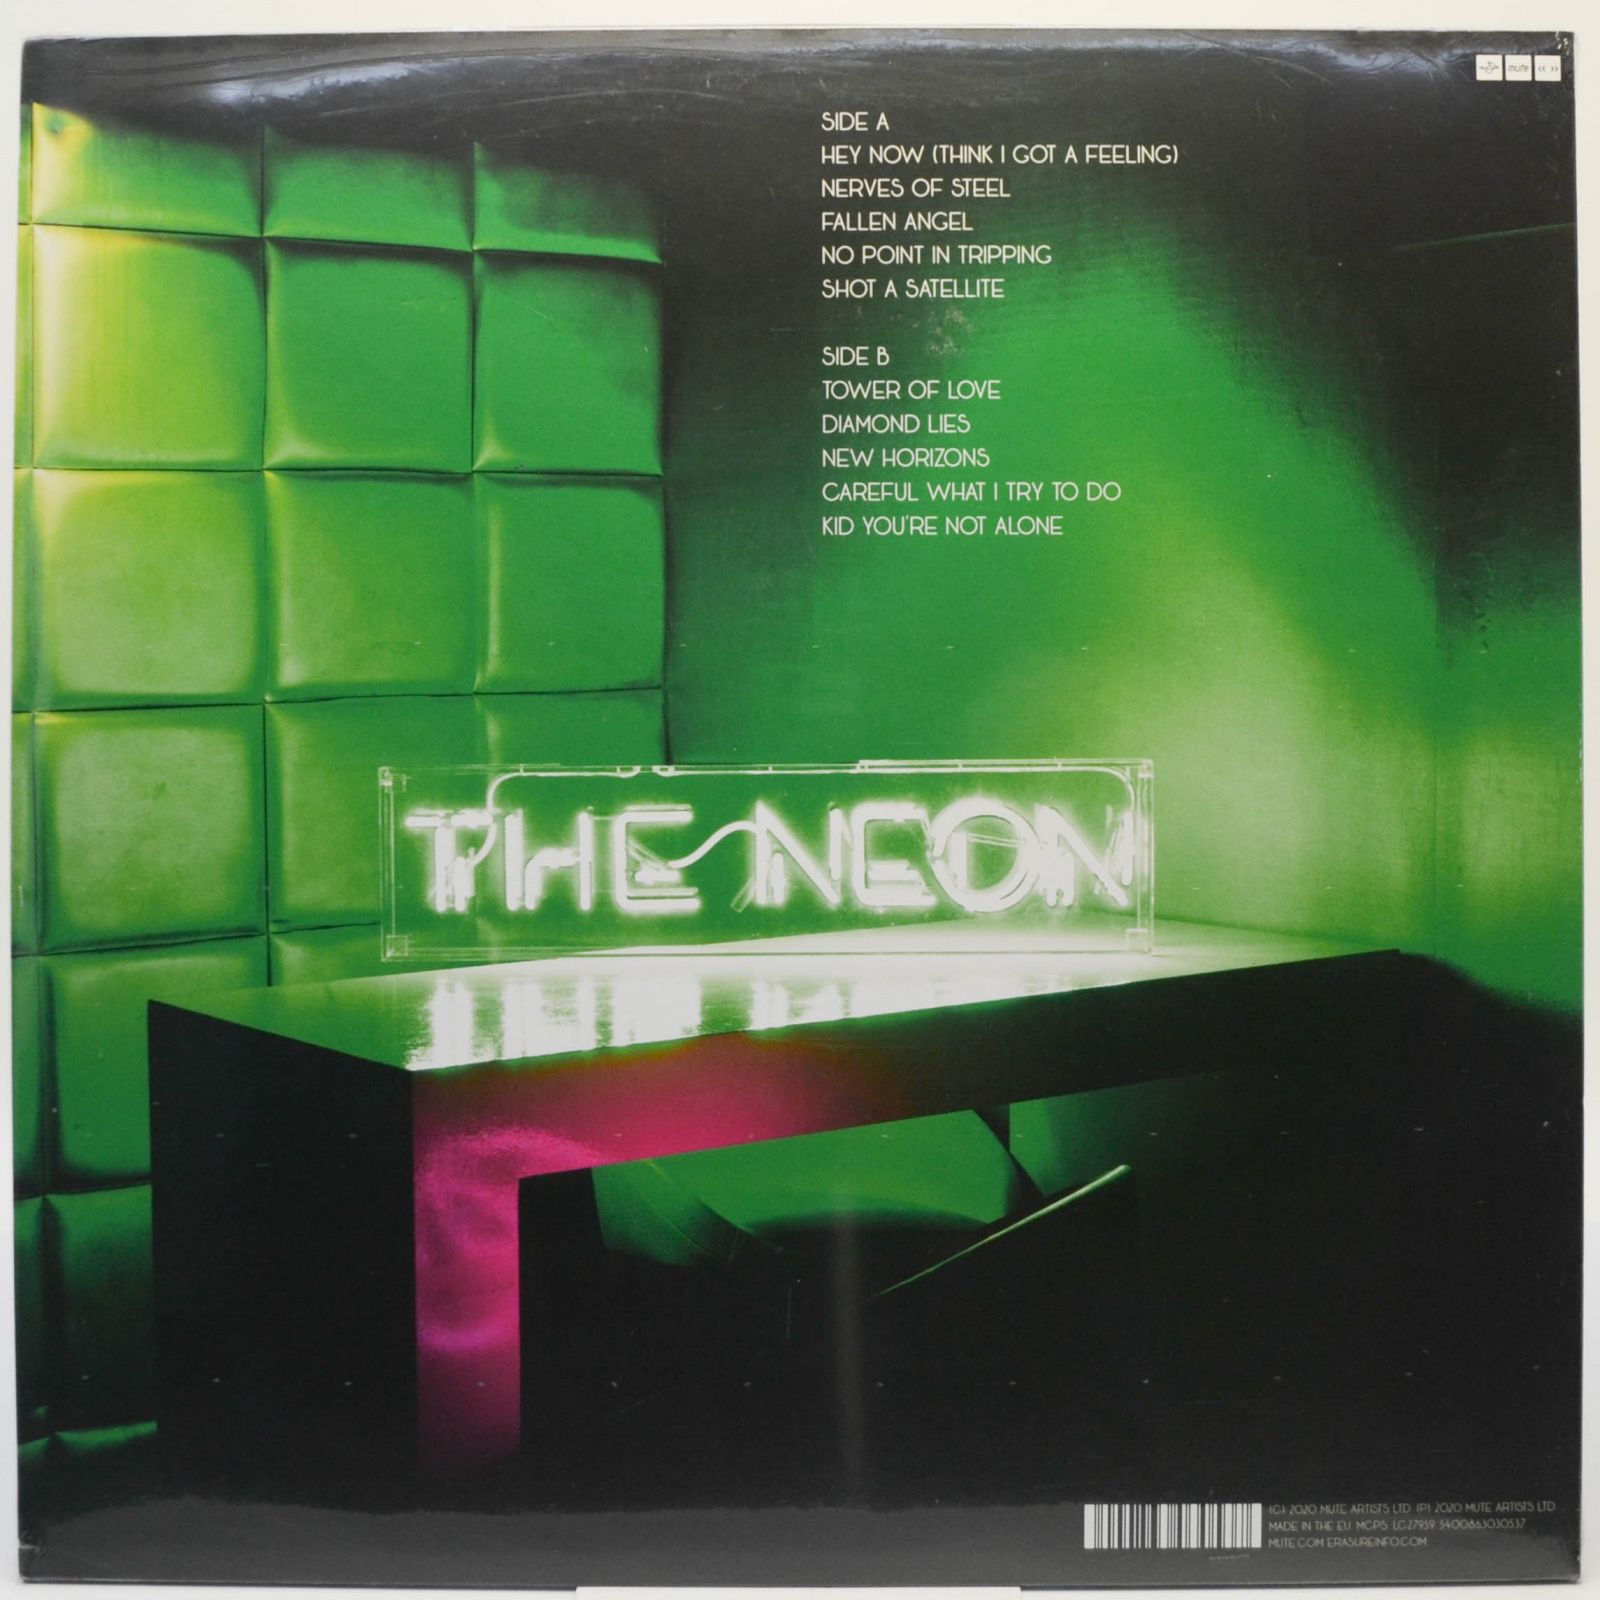 Erasure — The Neon, 2020